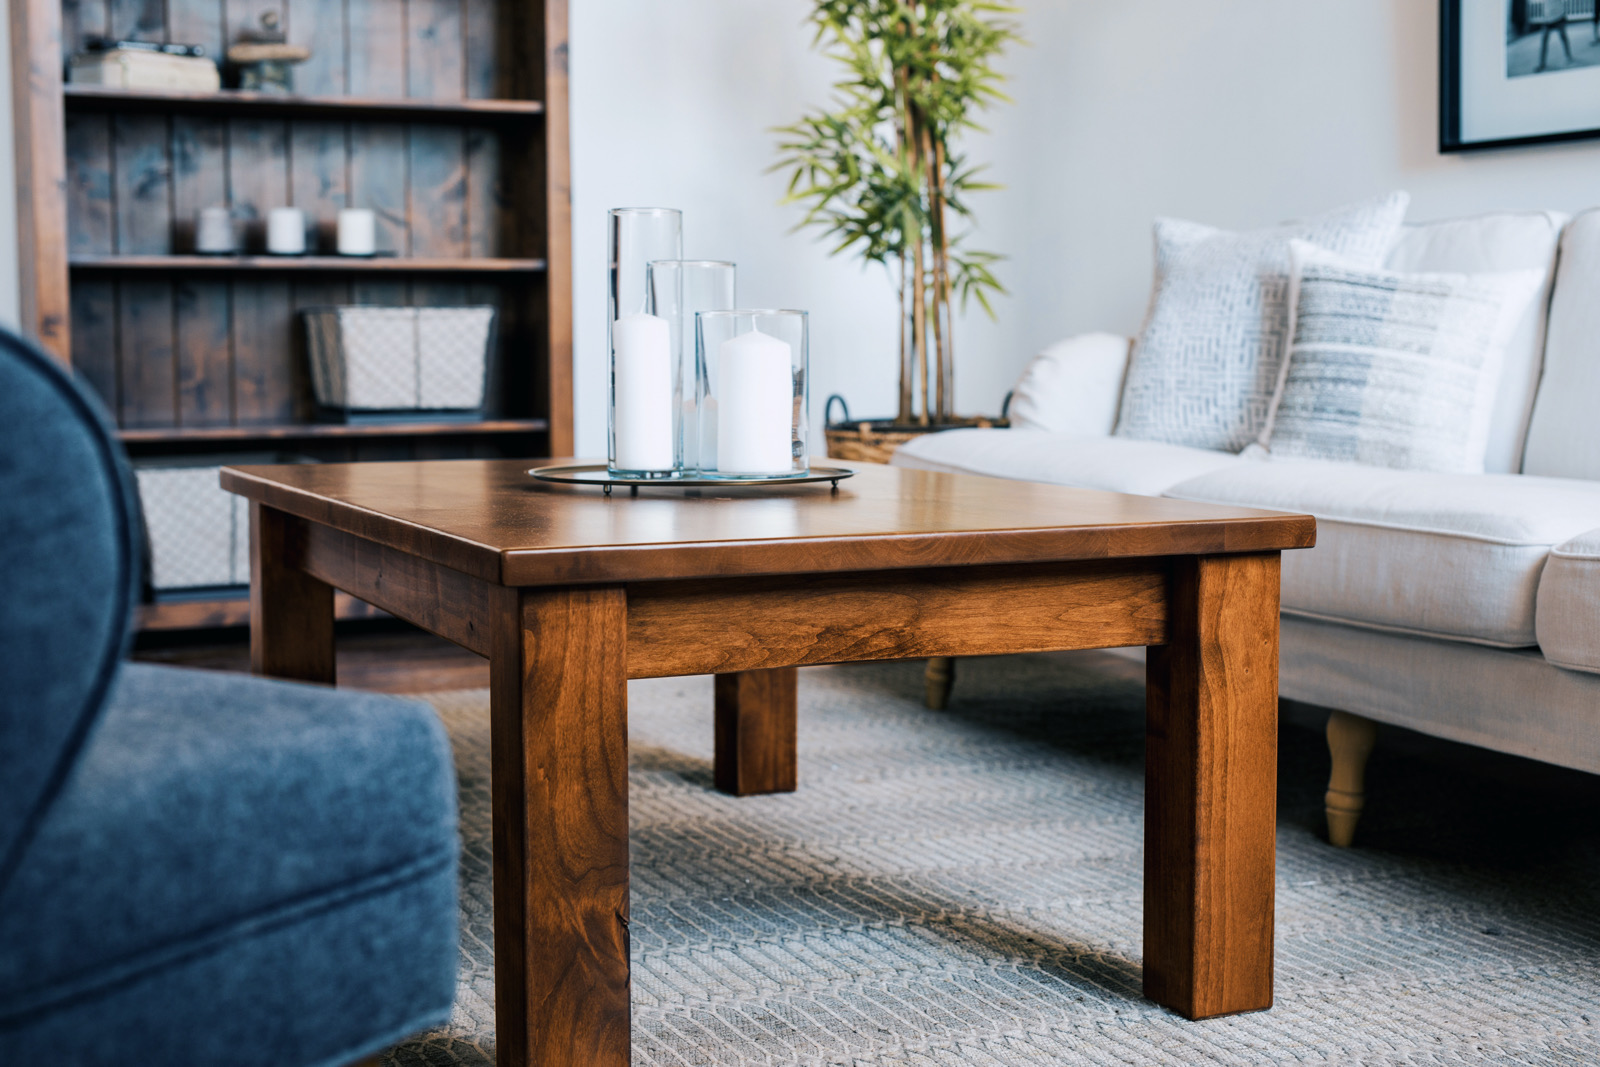 Grayson Coffee Table - Furnishing a Home